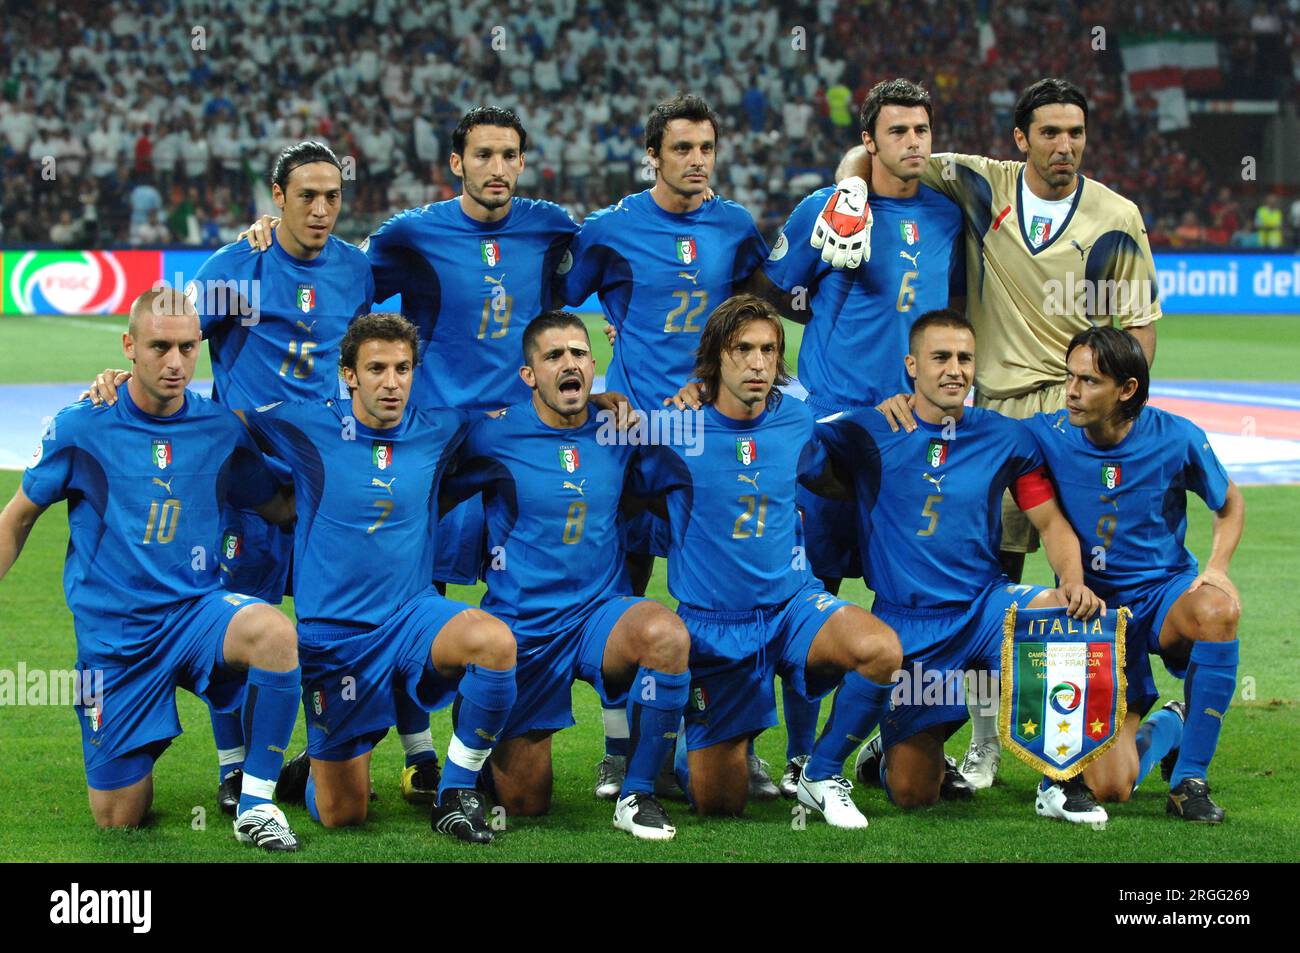 Milan Italy 2007-09-08: Italian national football team before the Italy-France match, 2008 European Football Championship qualification Stock Photo